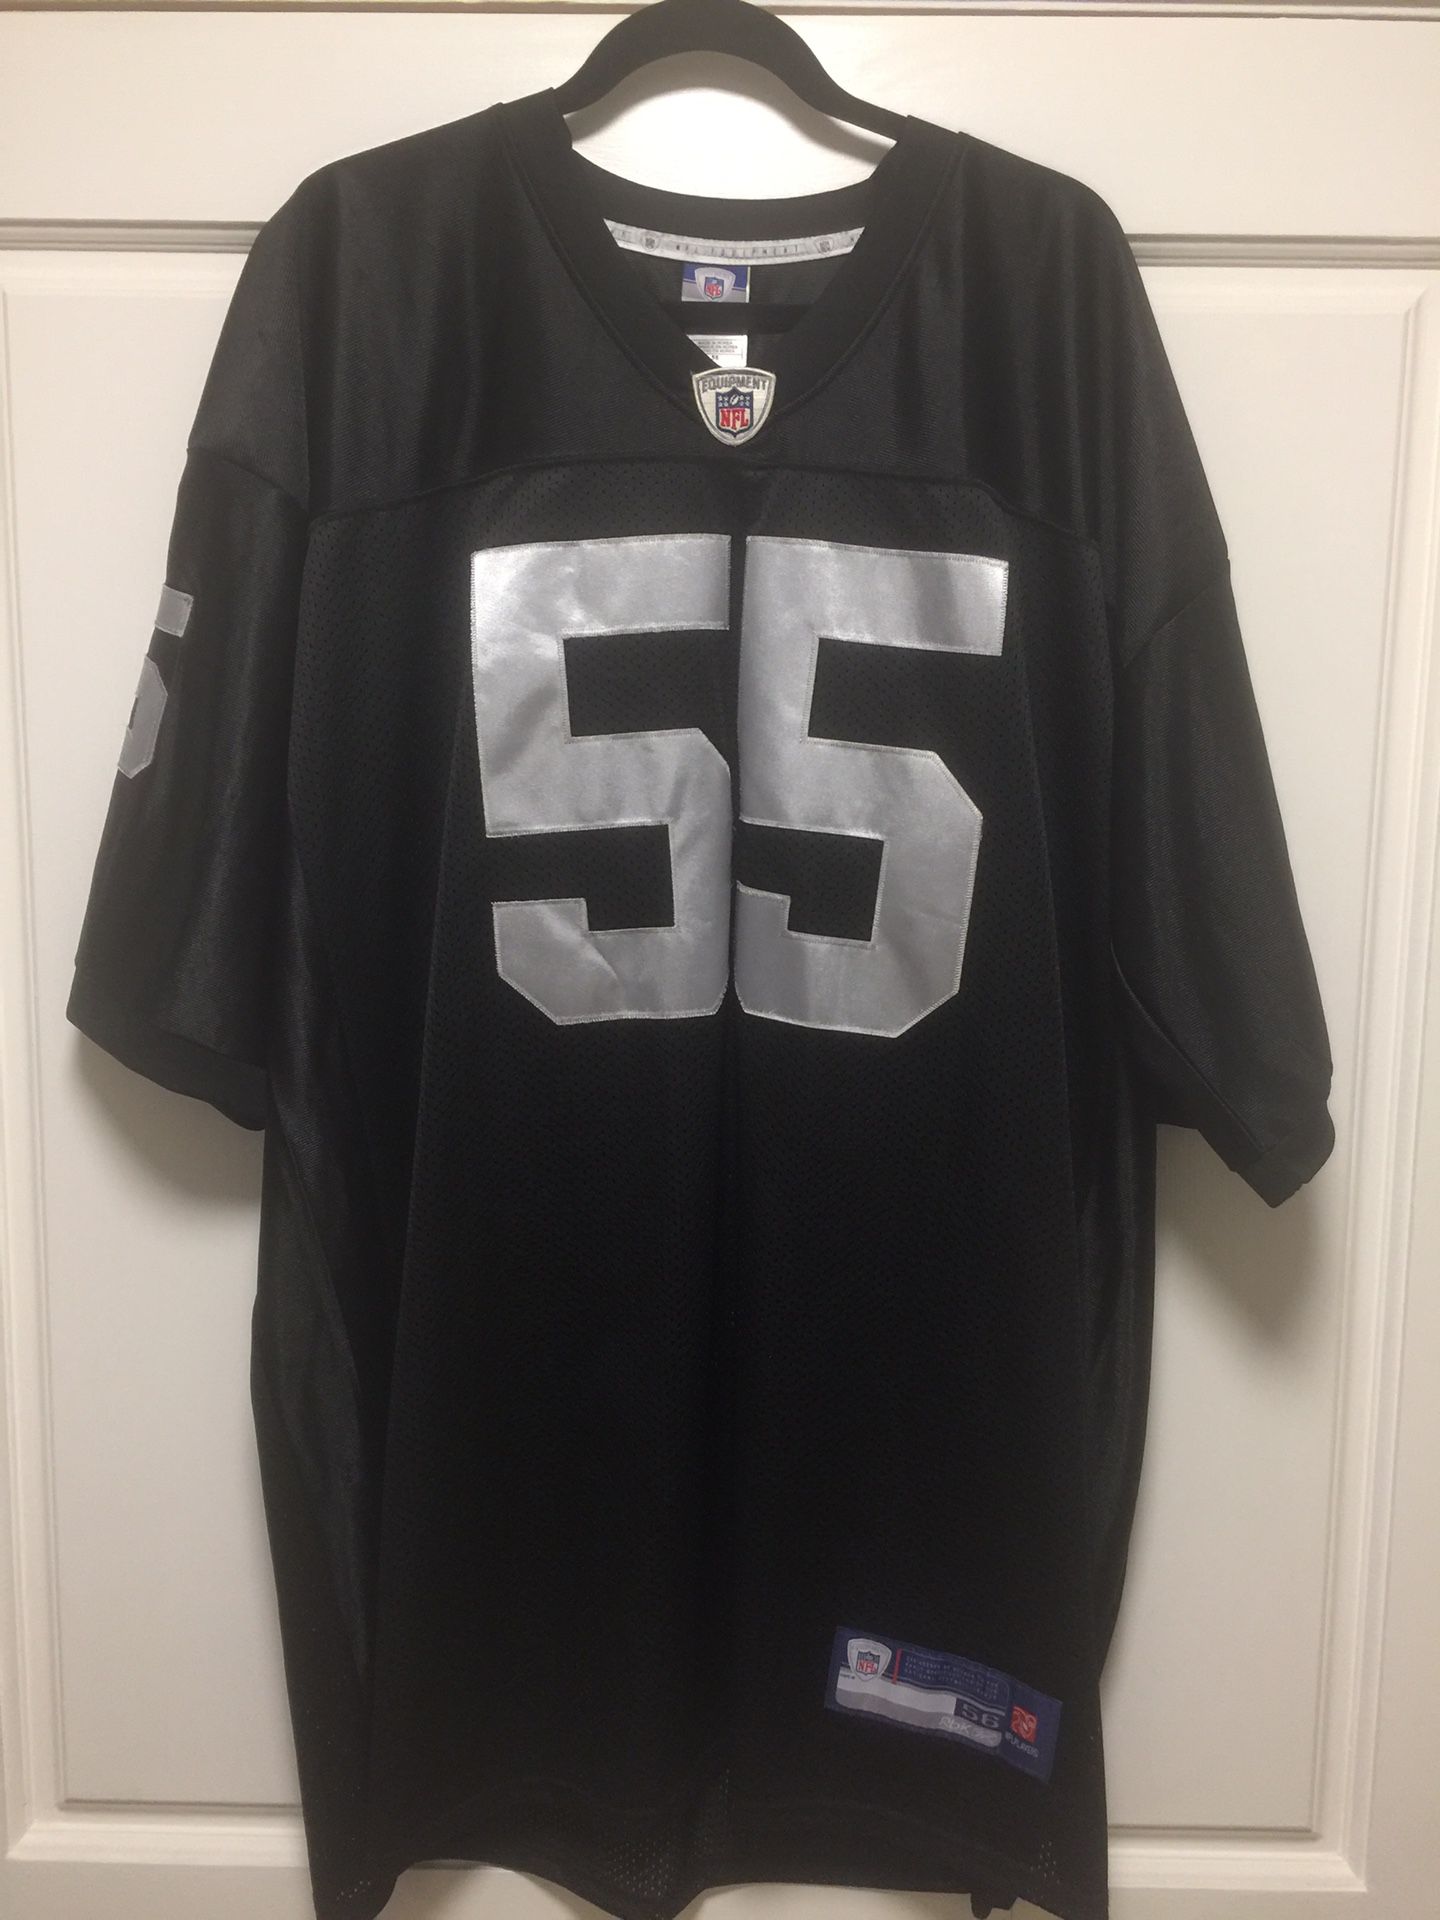 Oakland Raiders Rolando McClain #55 Reebok Jersey Black Silver Stitched 56